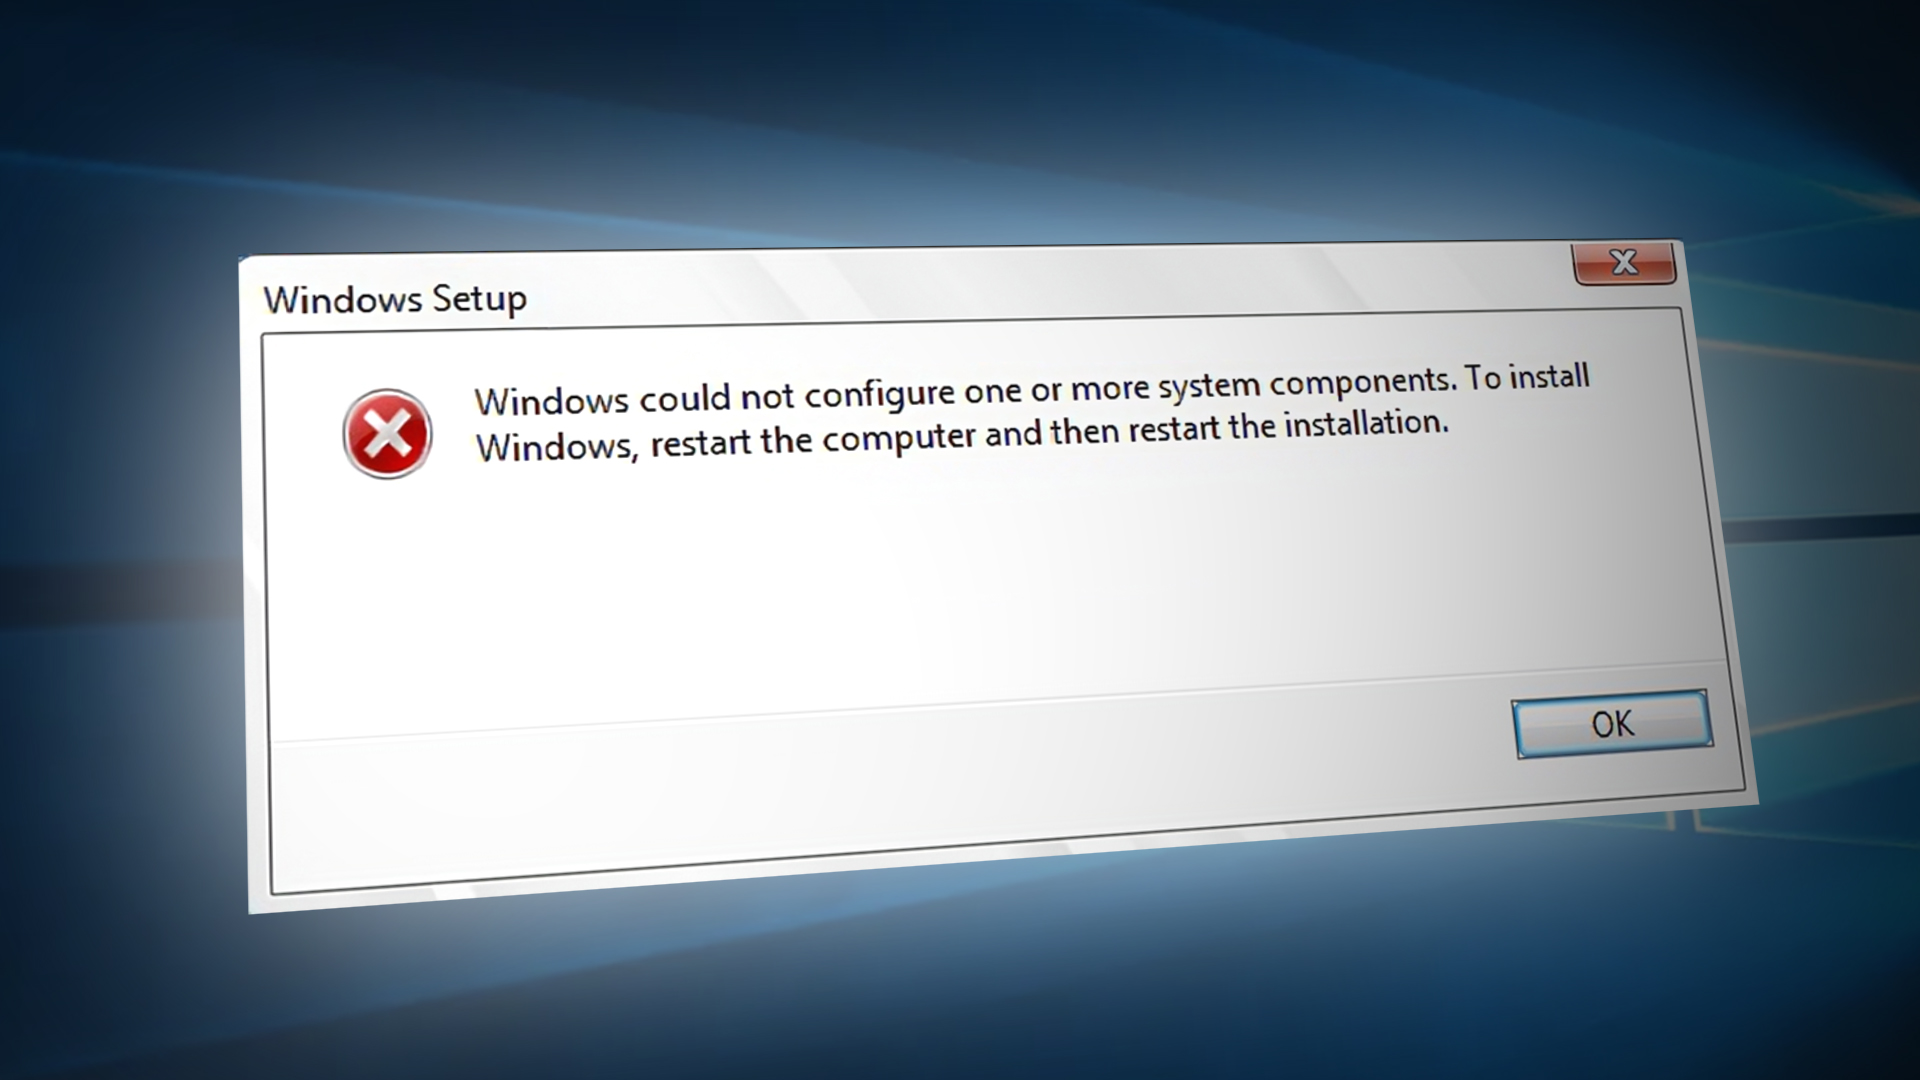 Boot configuration. Please run windows updates